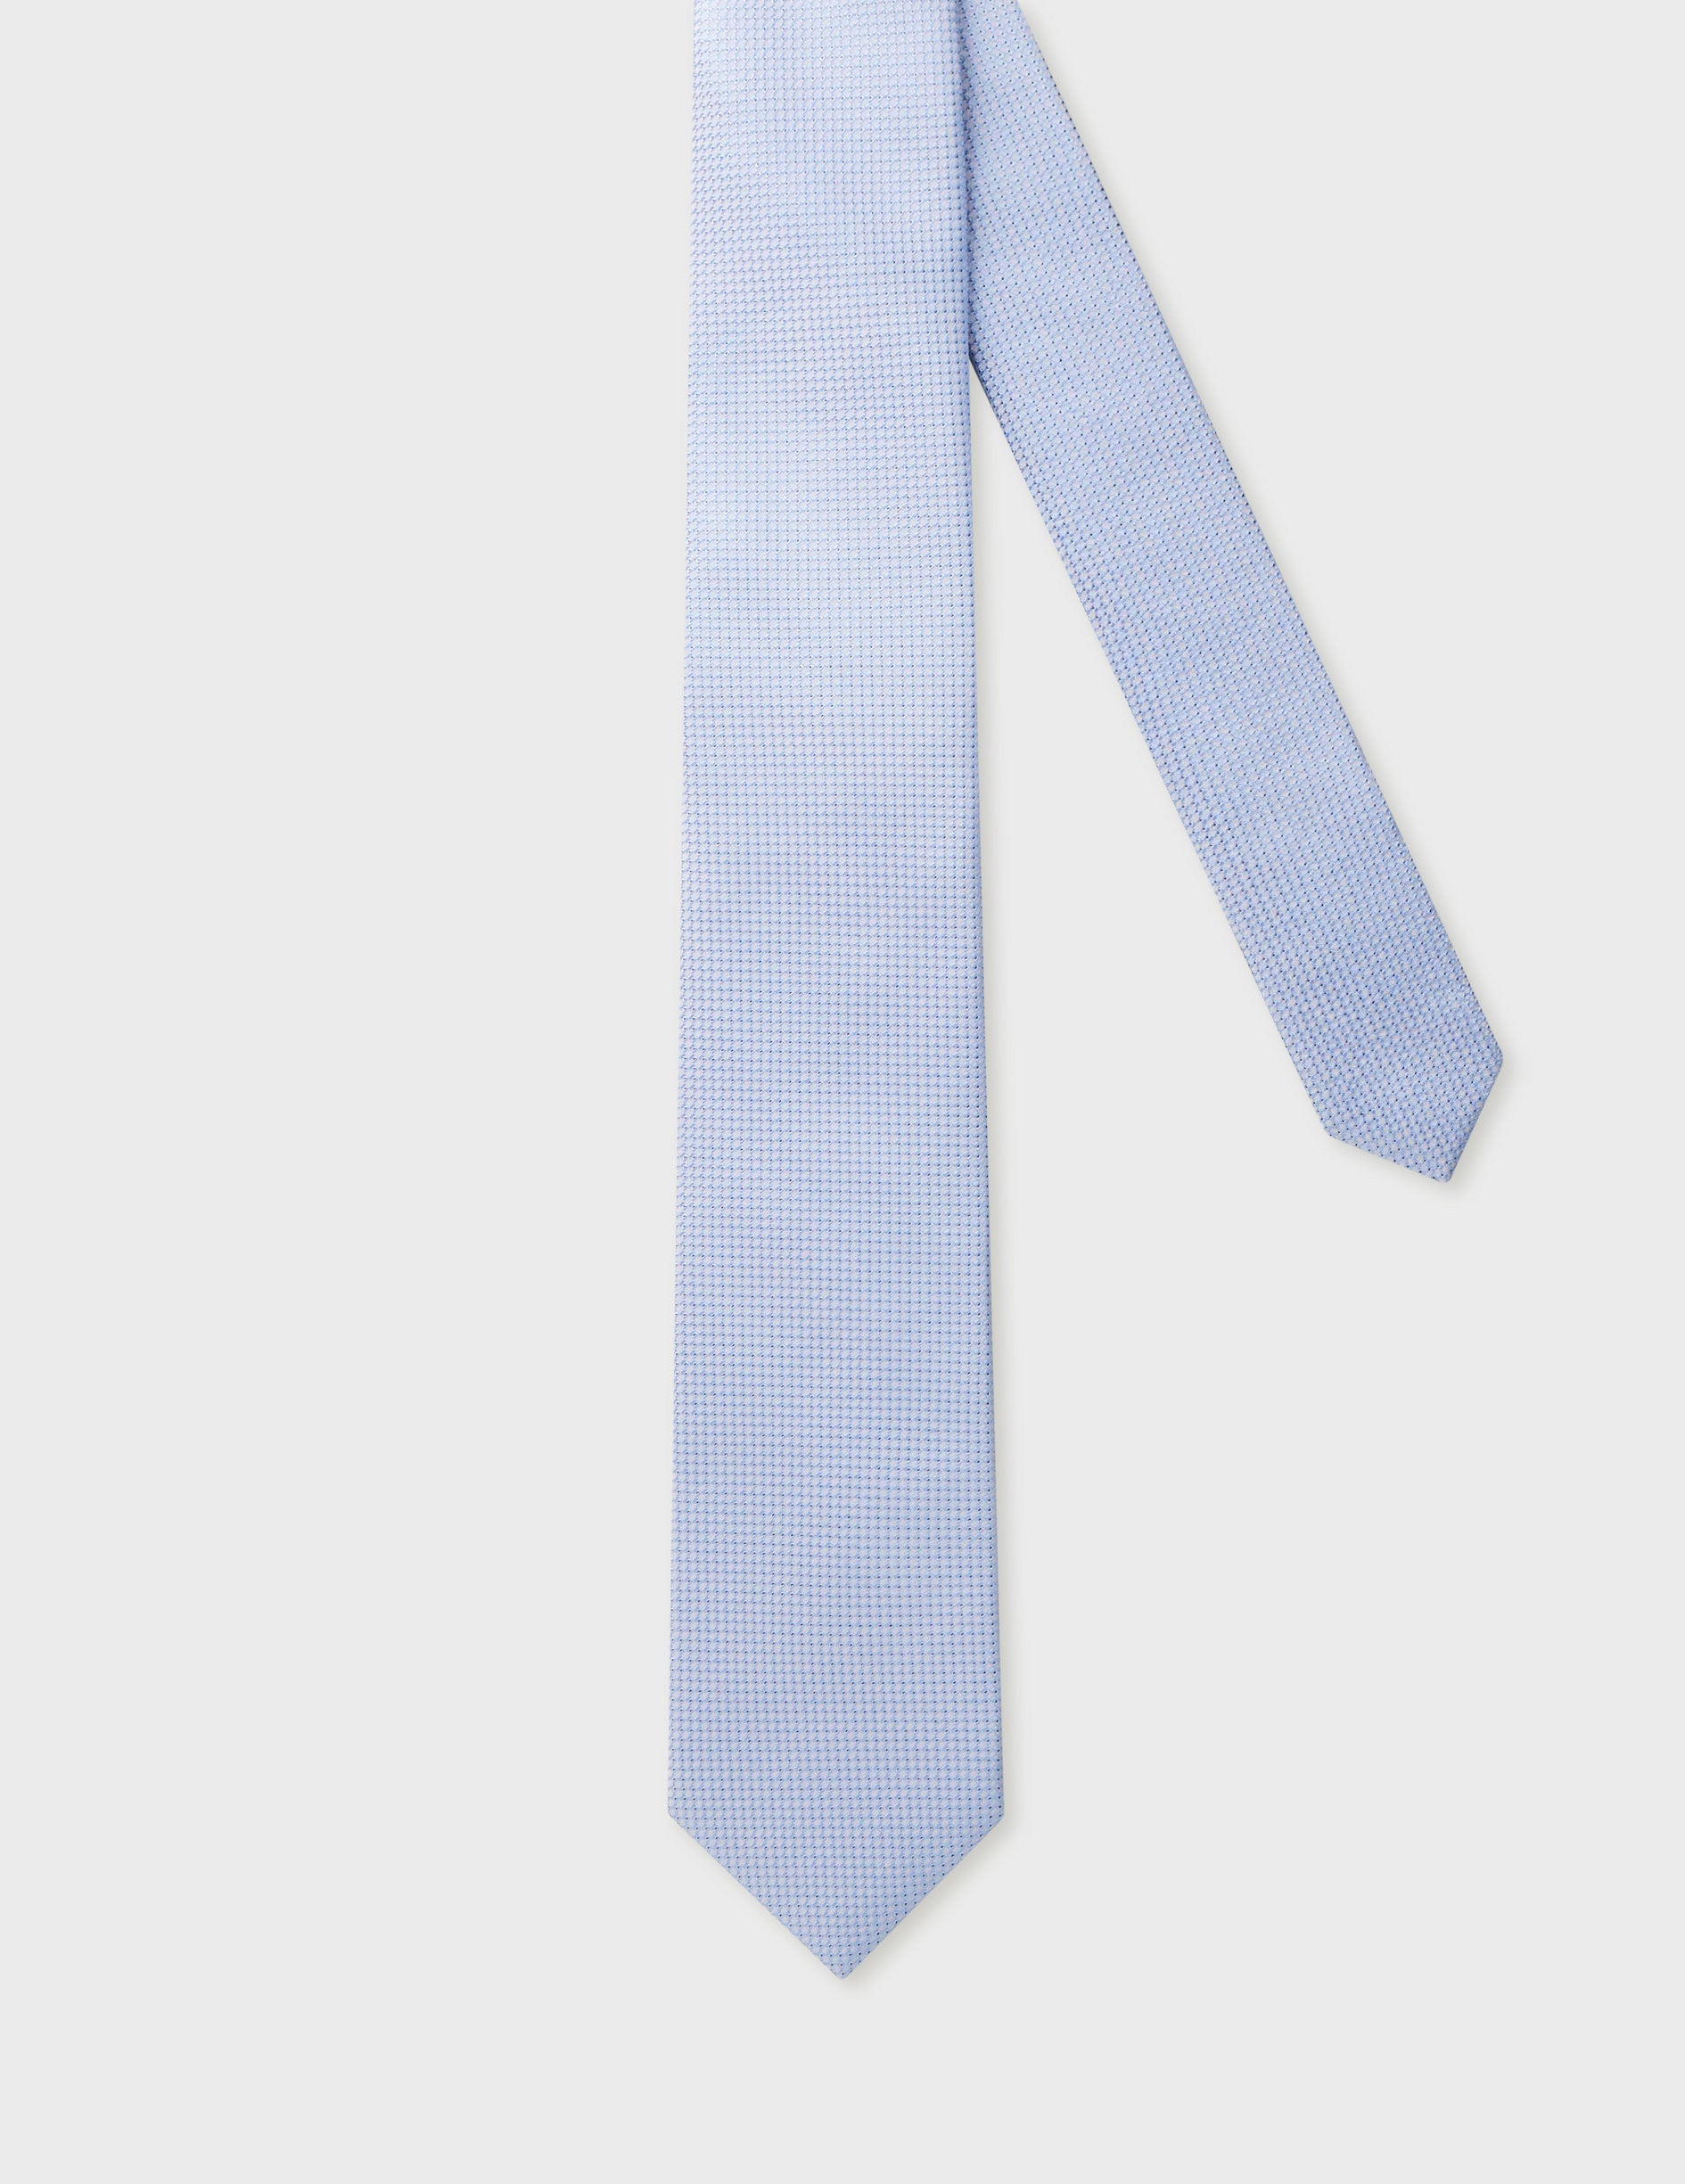 Patterned light blue silk tie